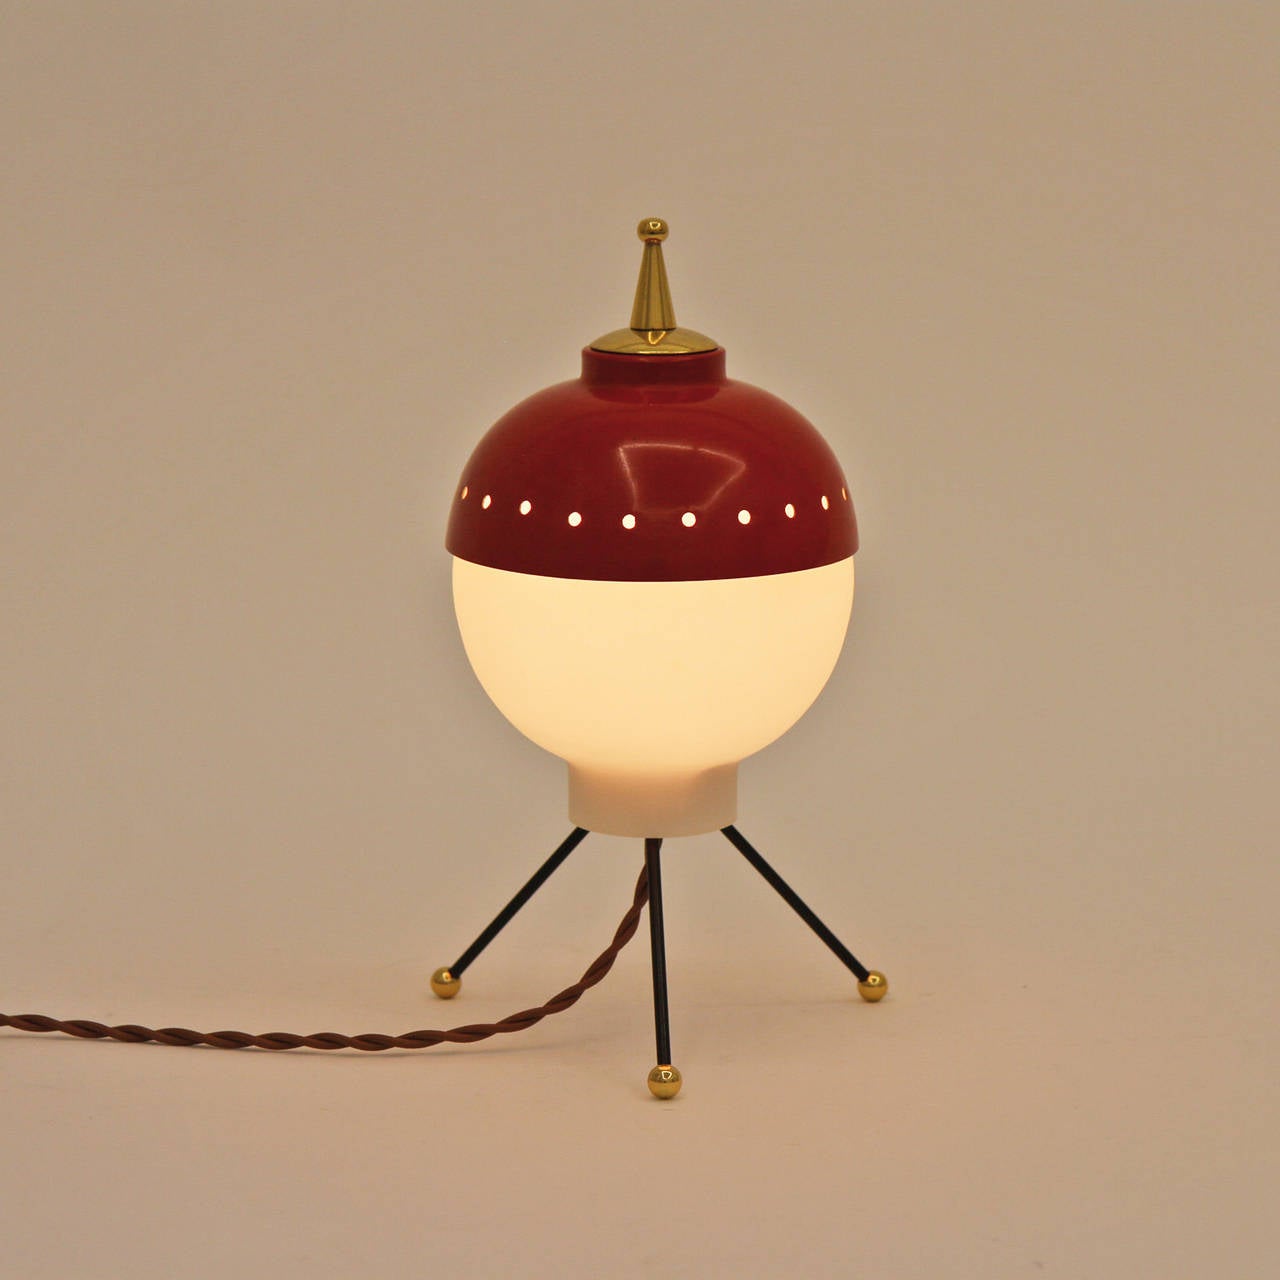 Mid-20th Century Whimsical 1950s Italian Sputnik Table Lamp